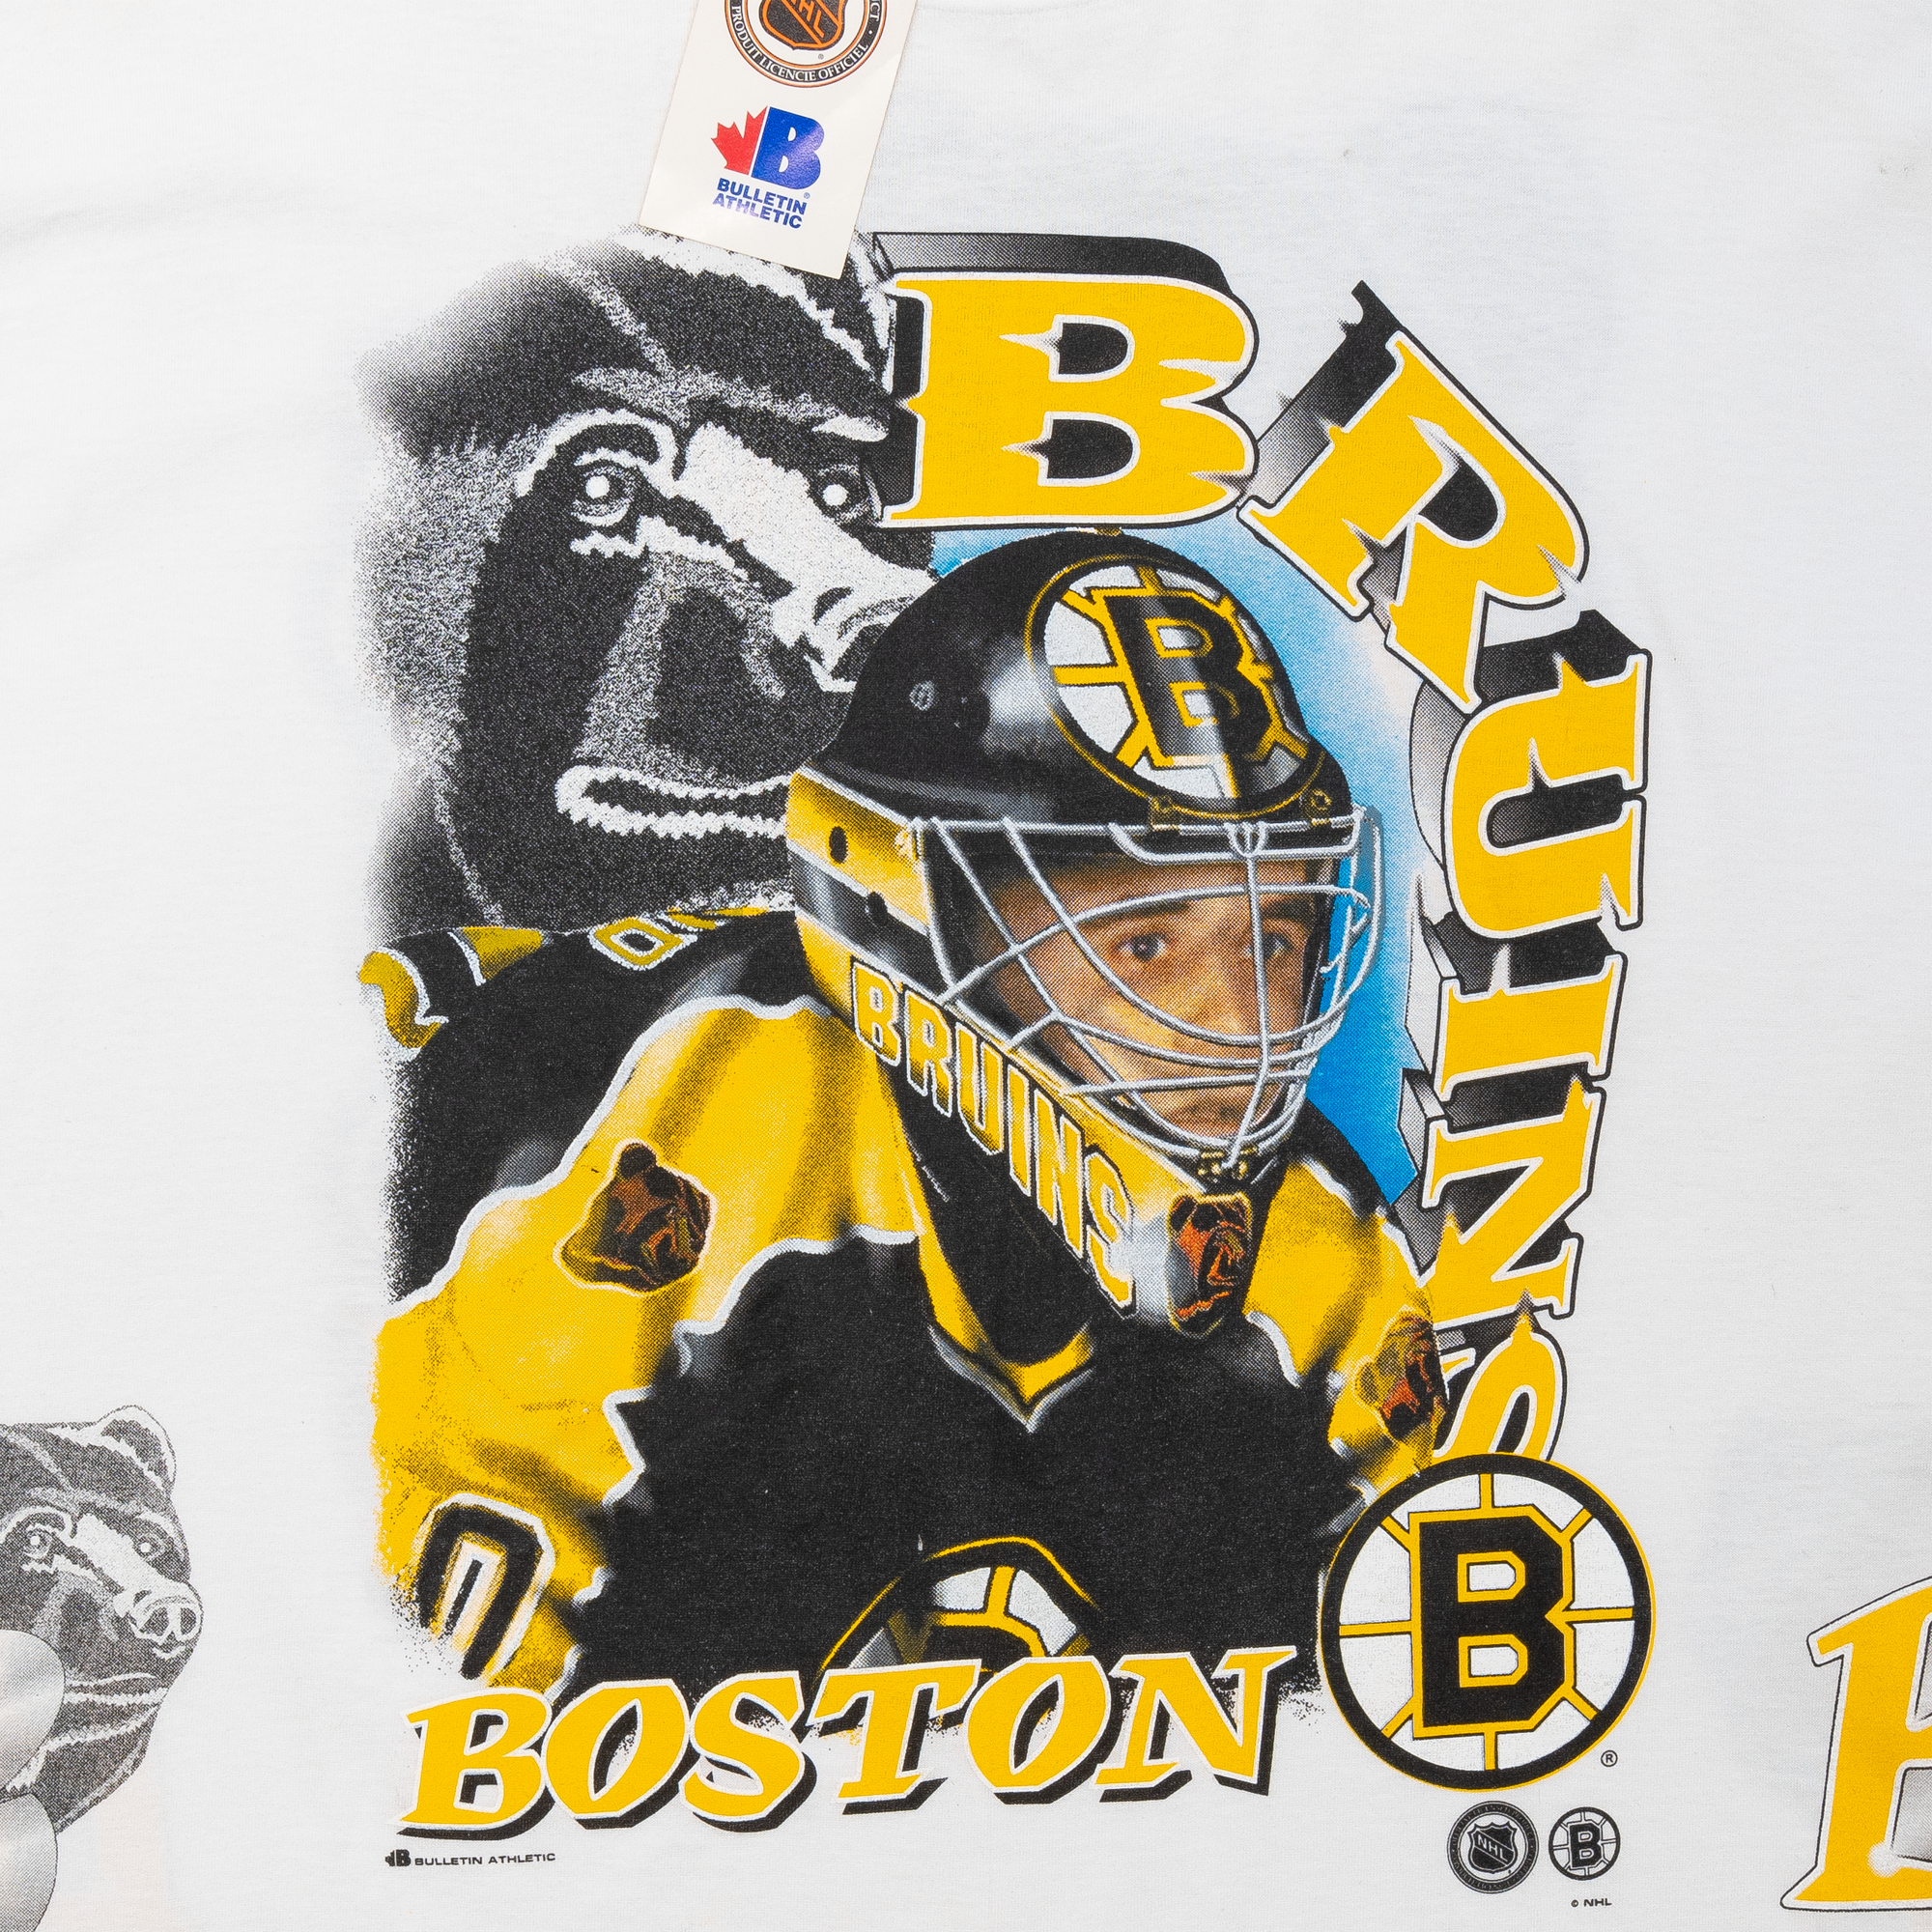 Boston Bruins Bulletin Athletic AOP Tee White-PLUS